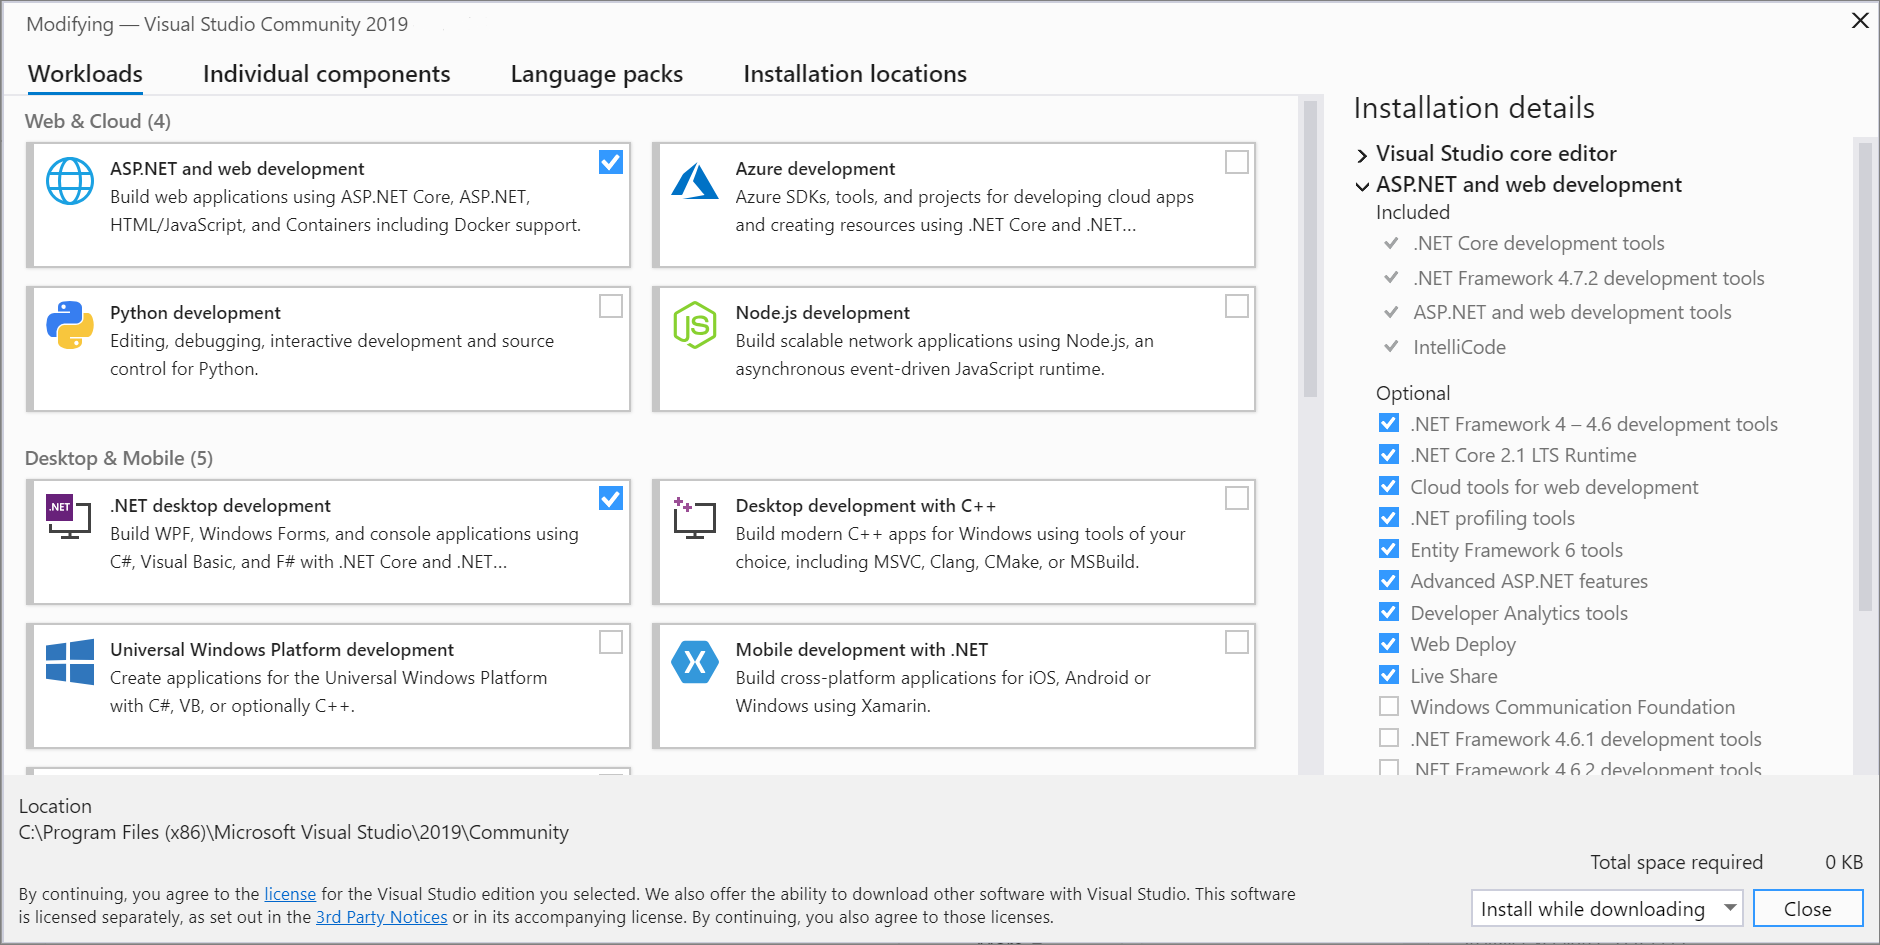 Modify Visual Studio workloads, components, & language packs